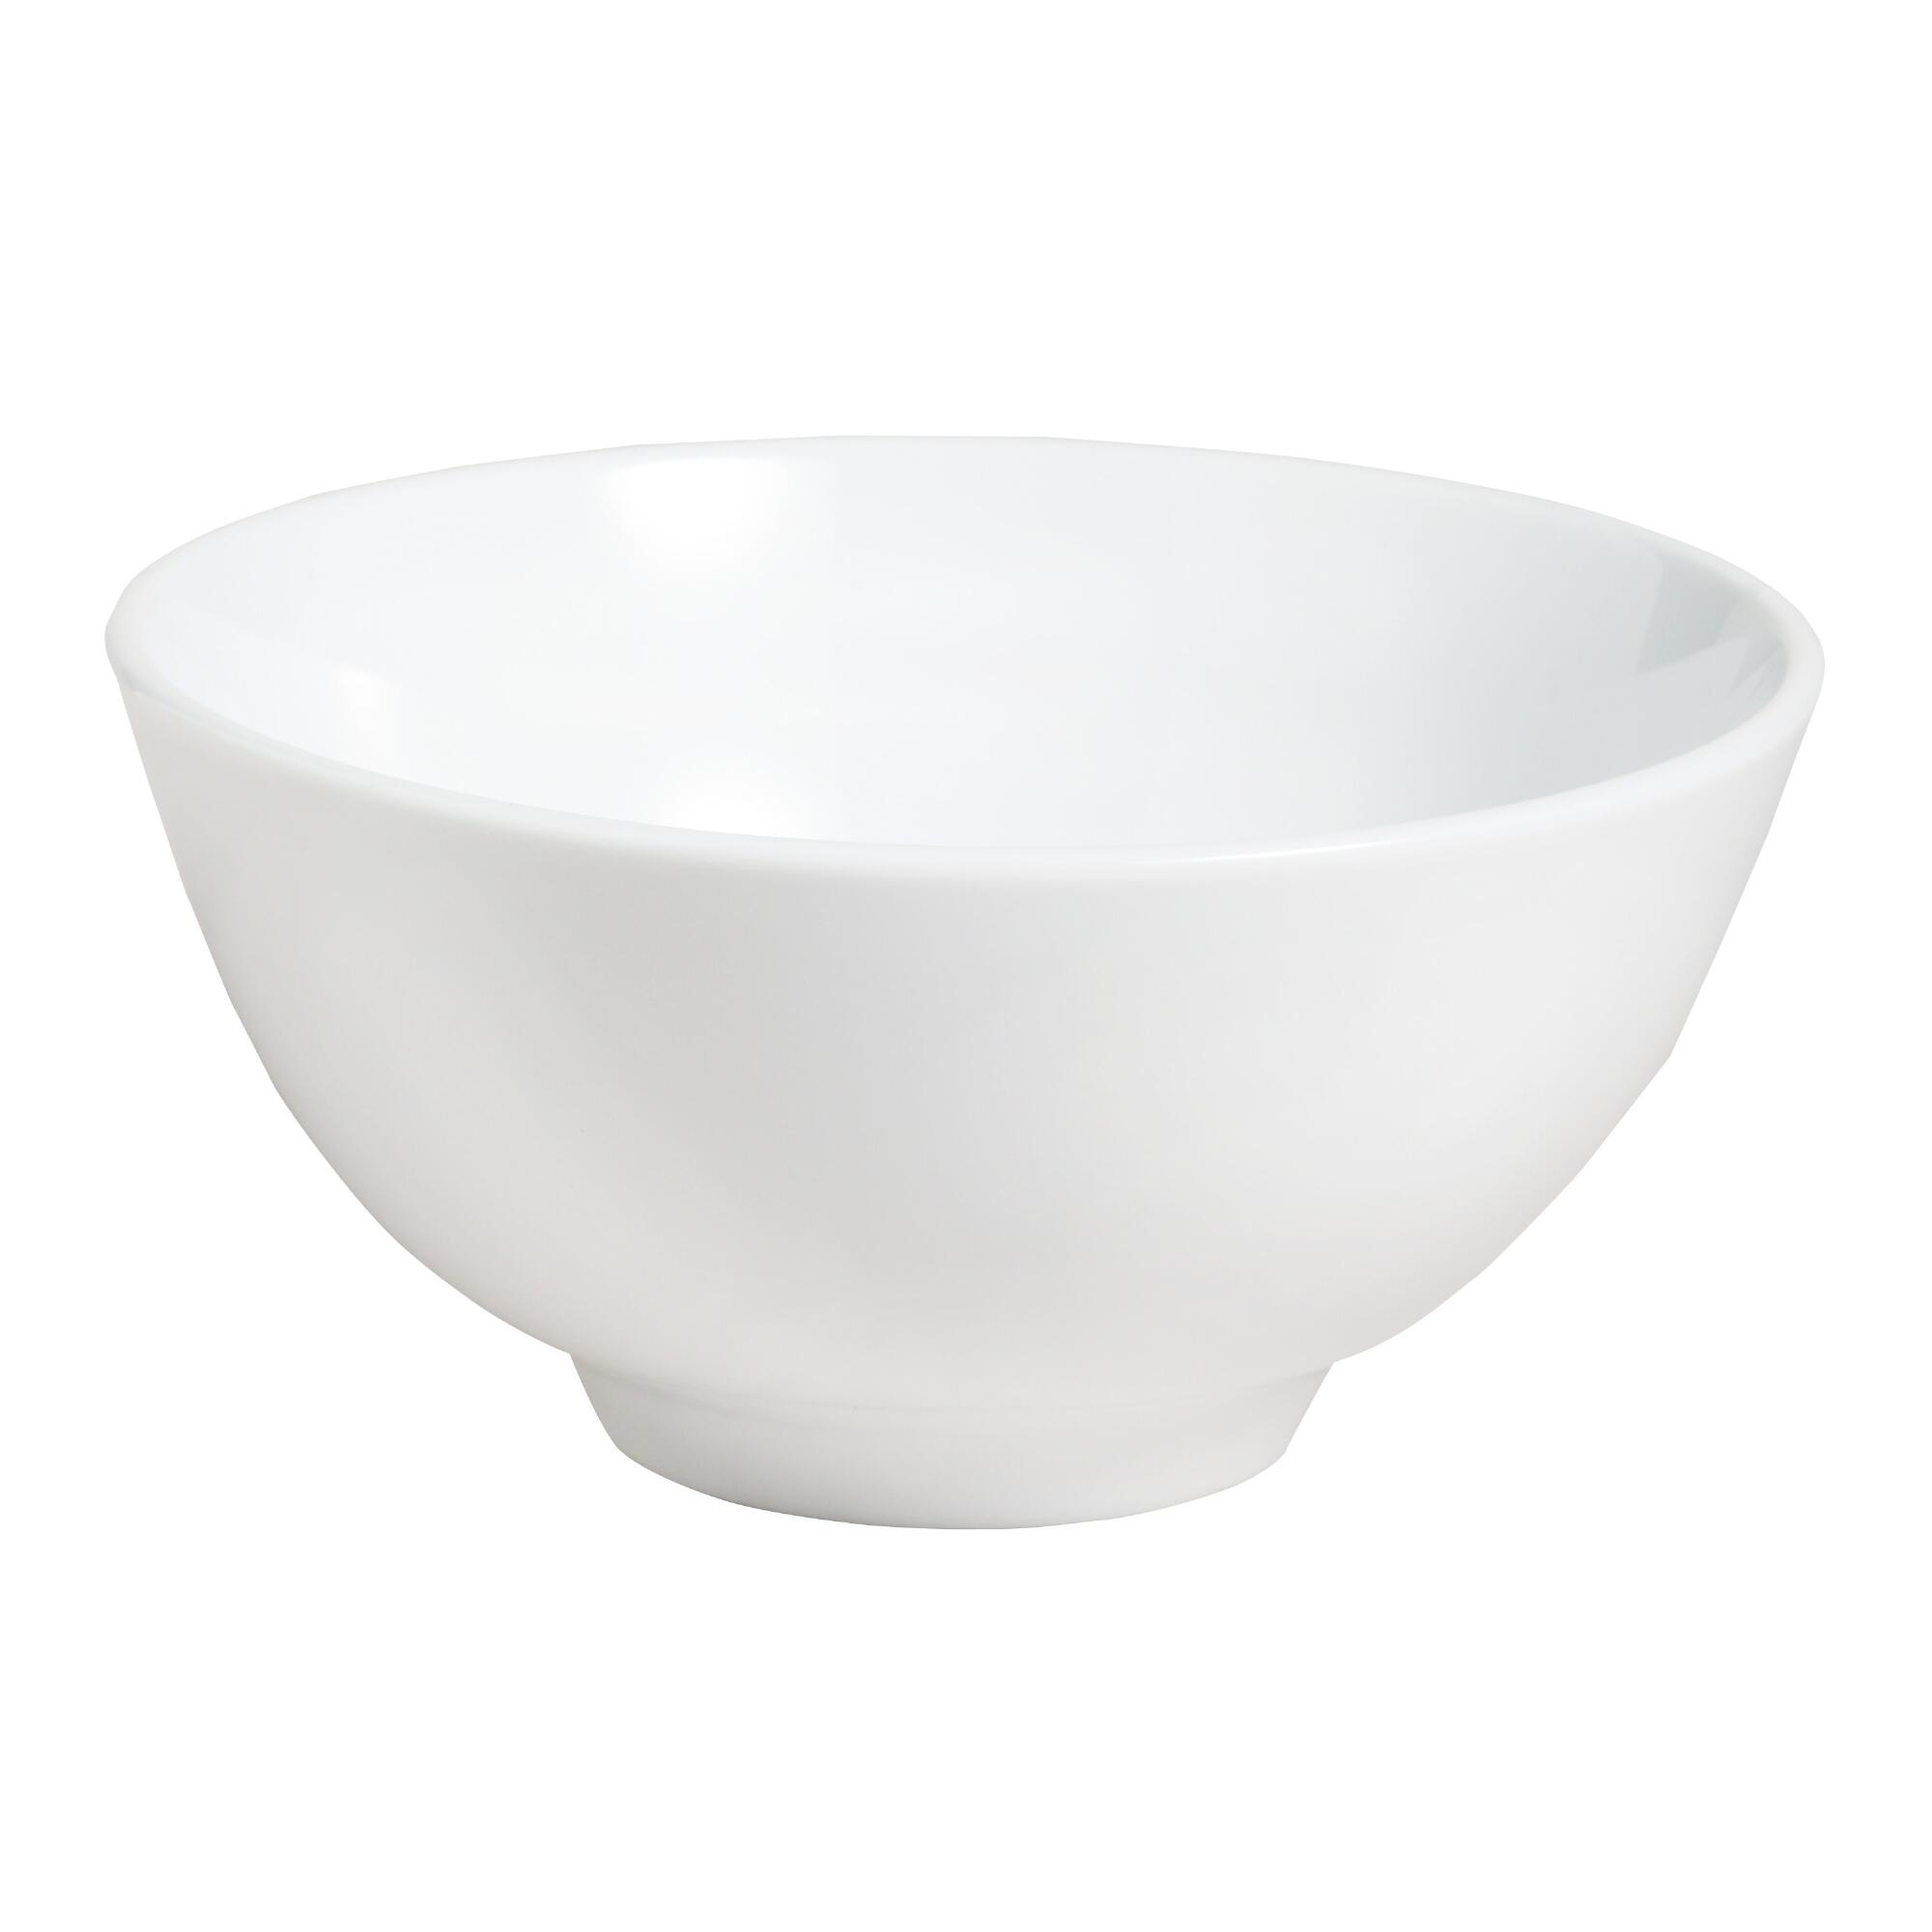 White Porcelain Bowls, Set of 4 by World Market